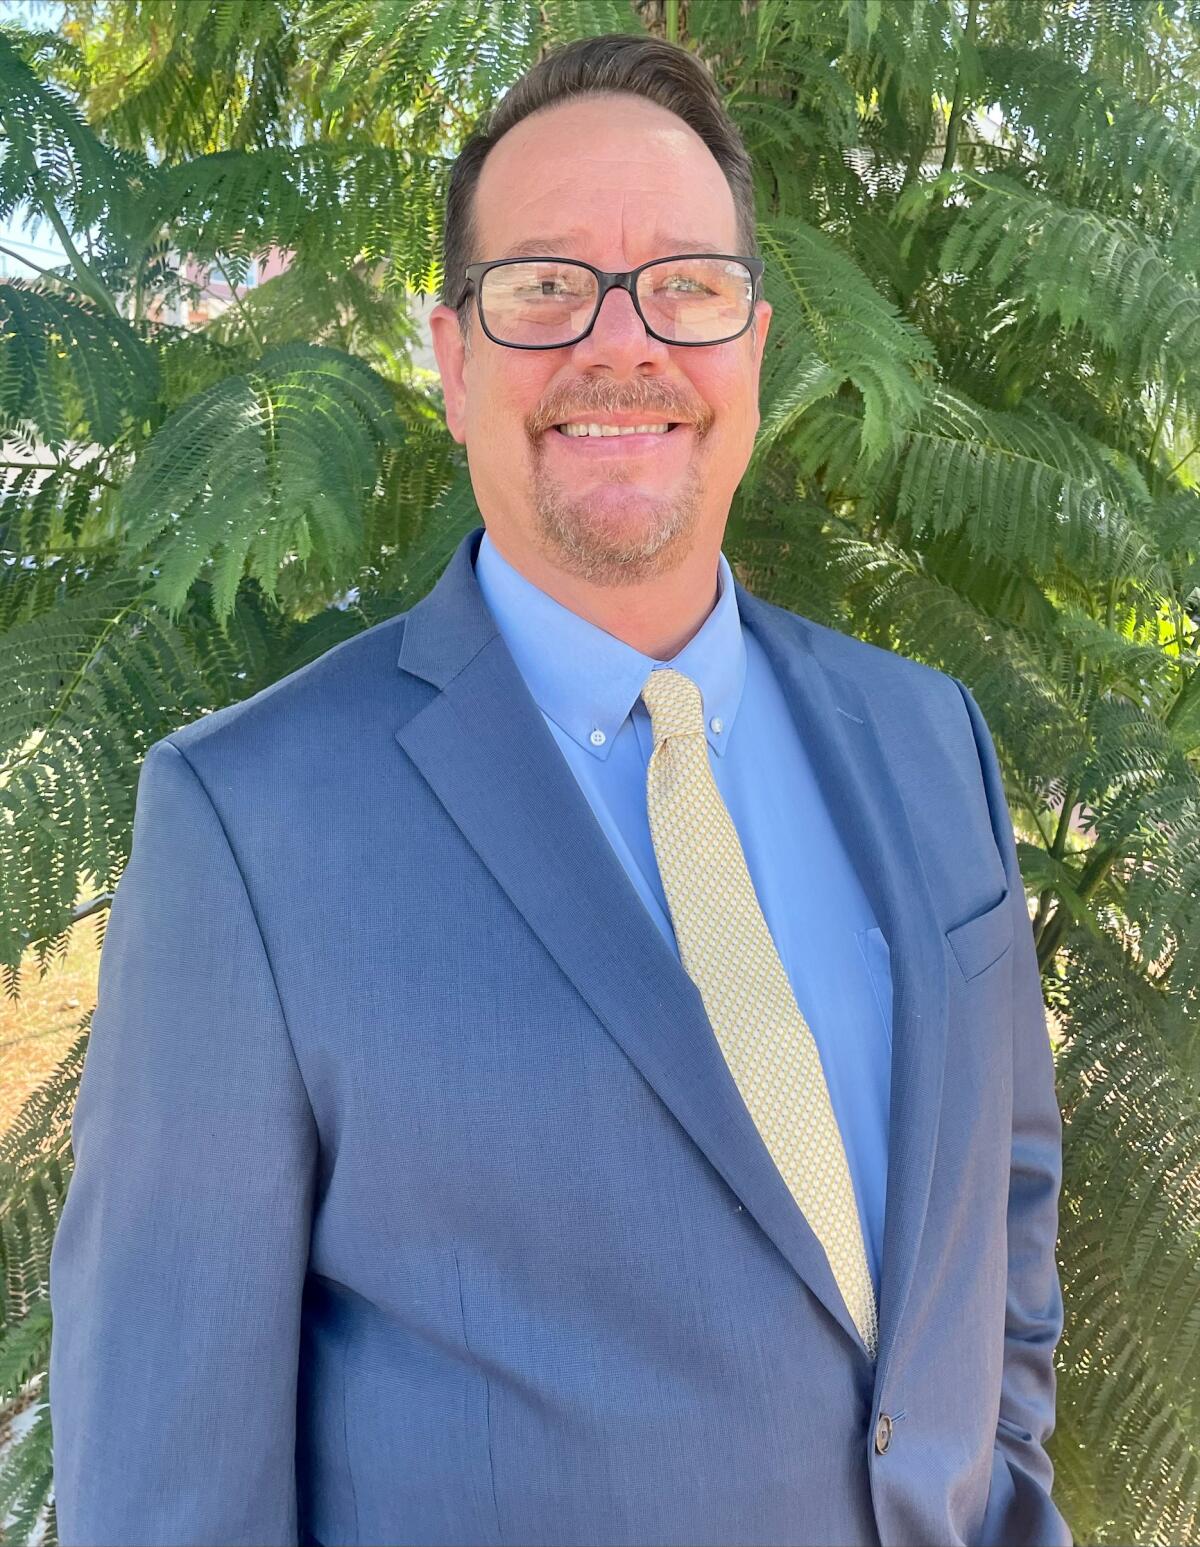 Keith Keiper is the new principal of Torrey Pines Elementary School in La Jolla.